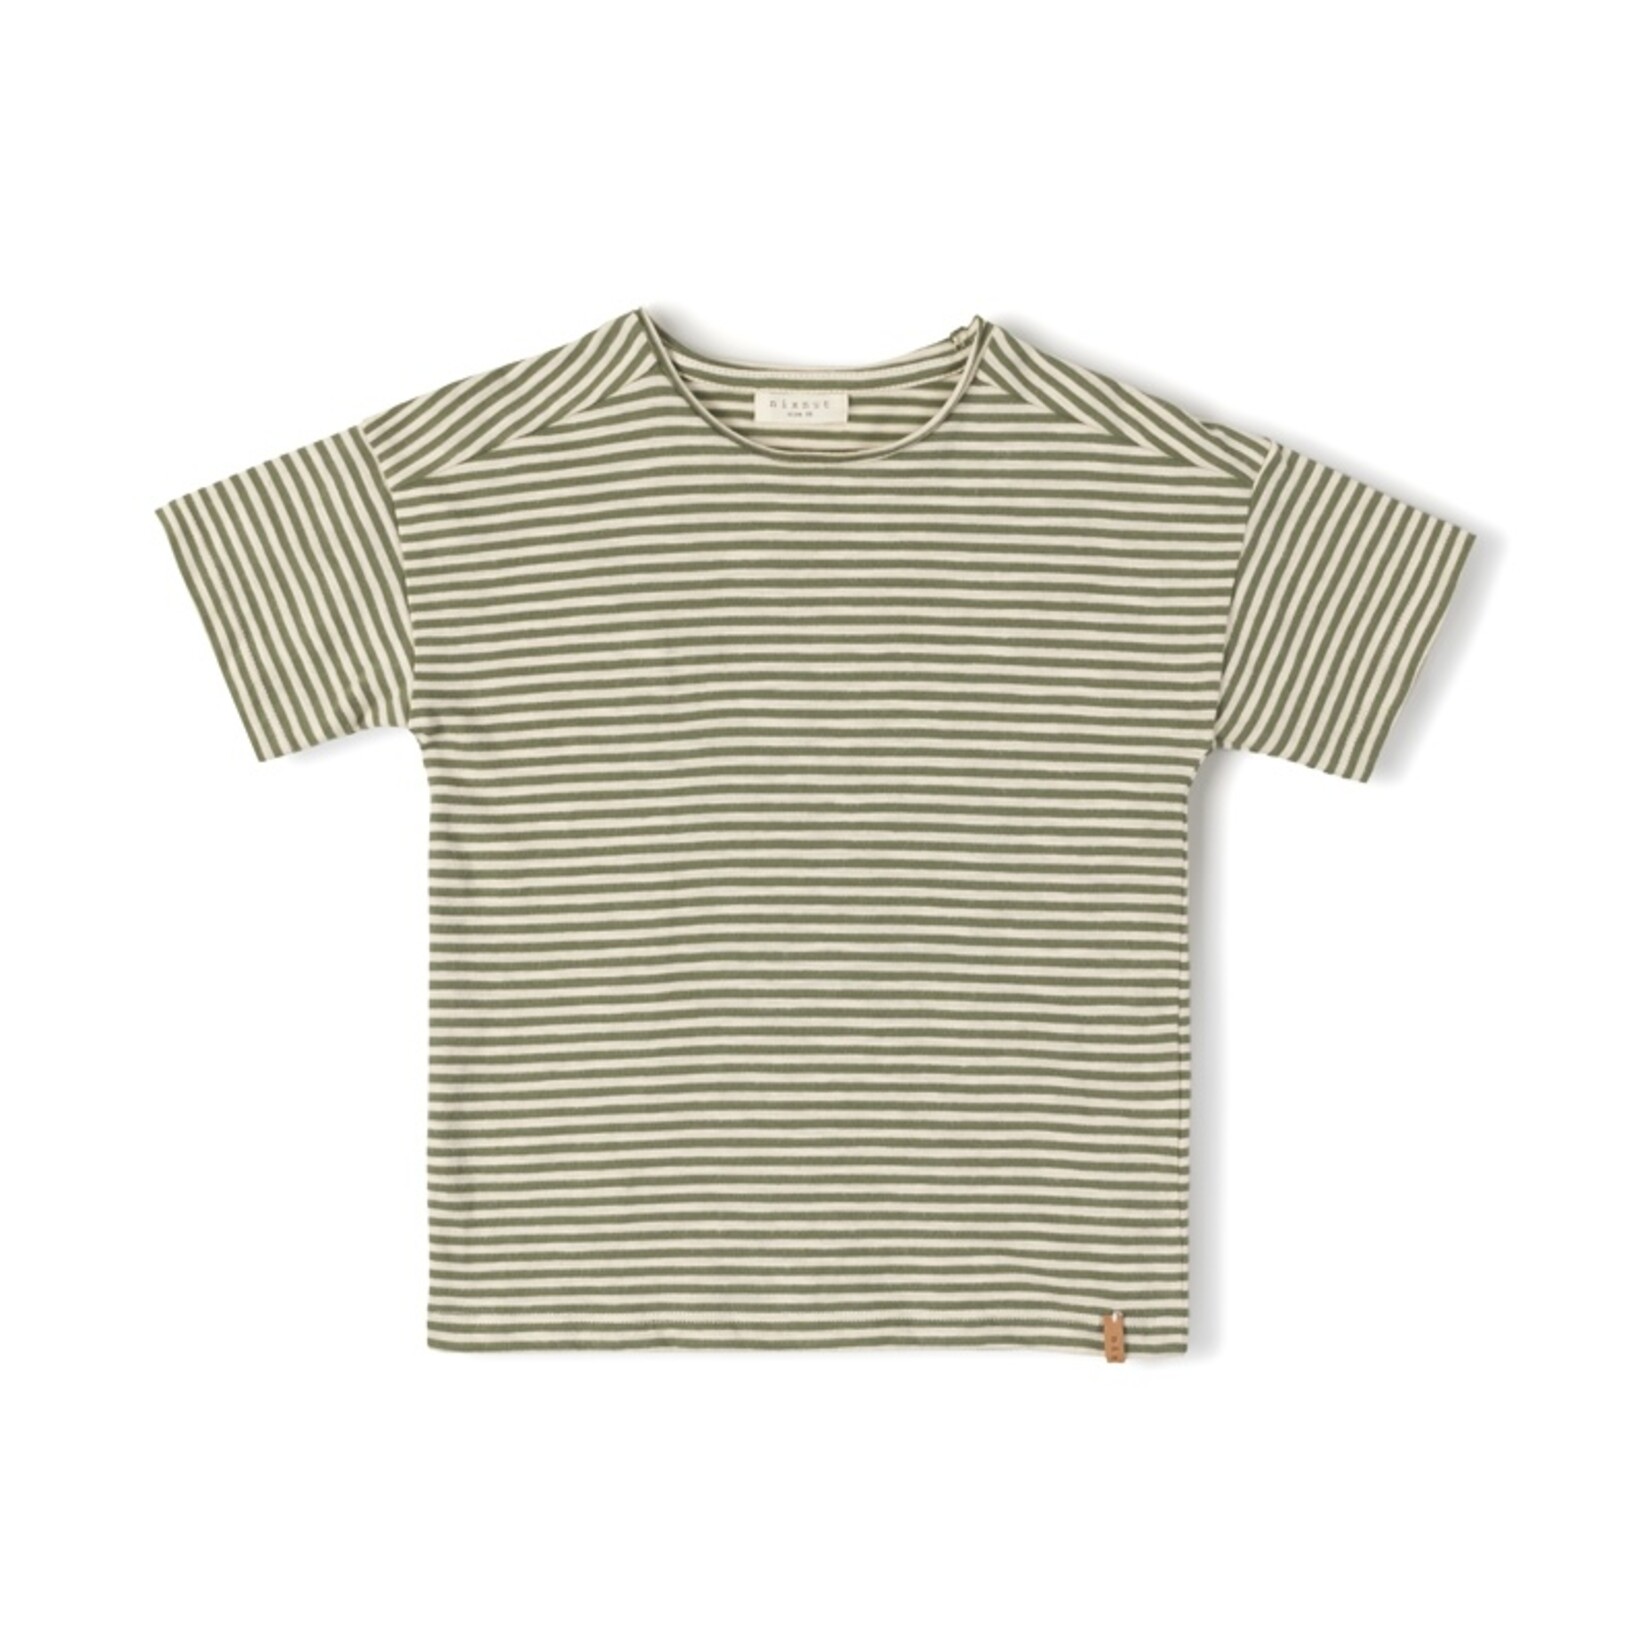 Nixnut Com Shirt - Khaki Stripe